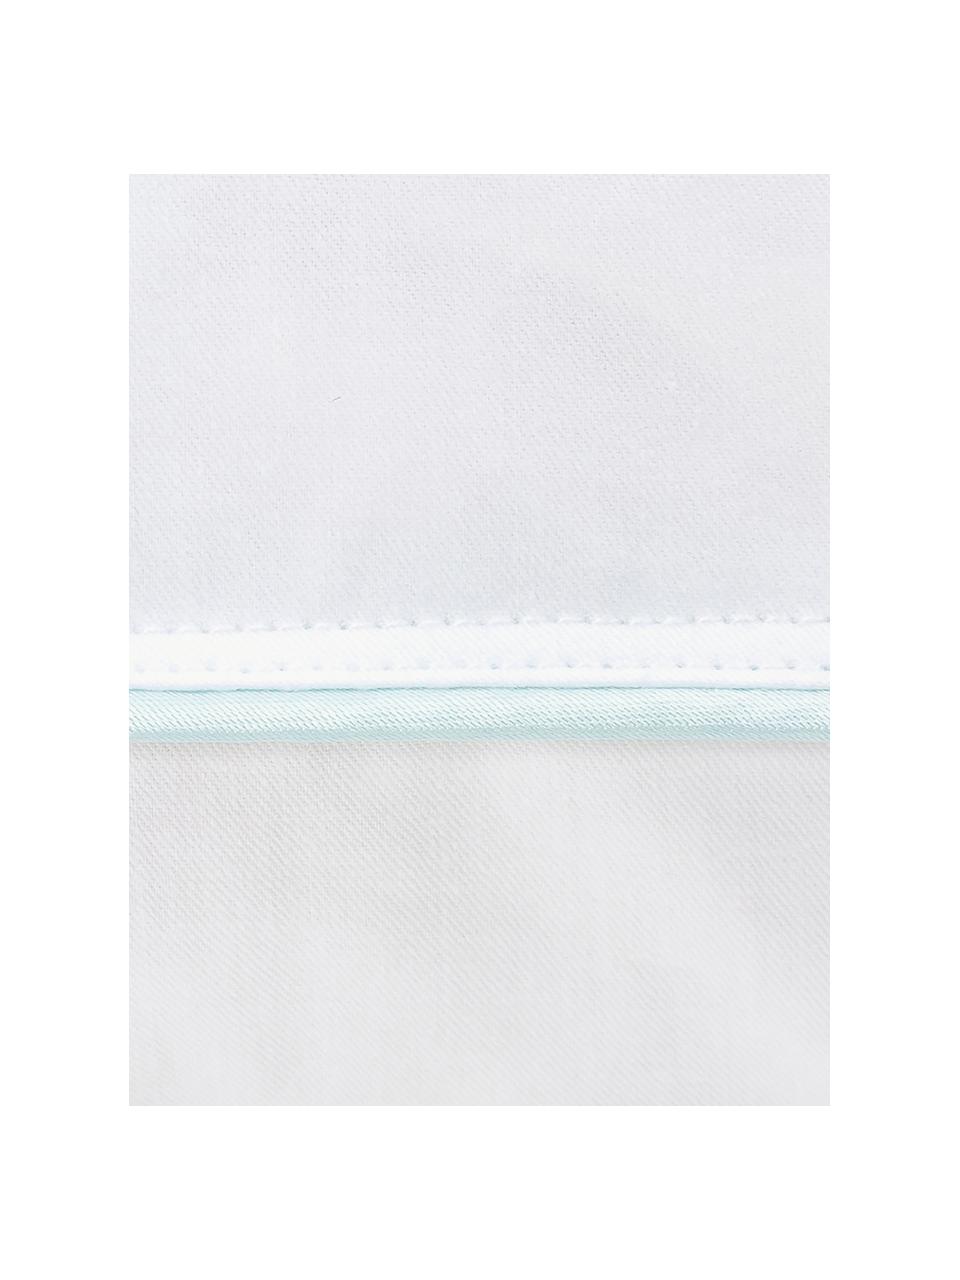 Almohada de plumas Standard, firmeza media, Funda: 100% algodón, tejido fino, Blanco, An 40 x L 80 cm